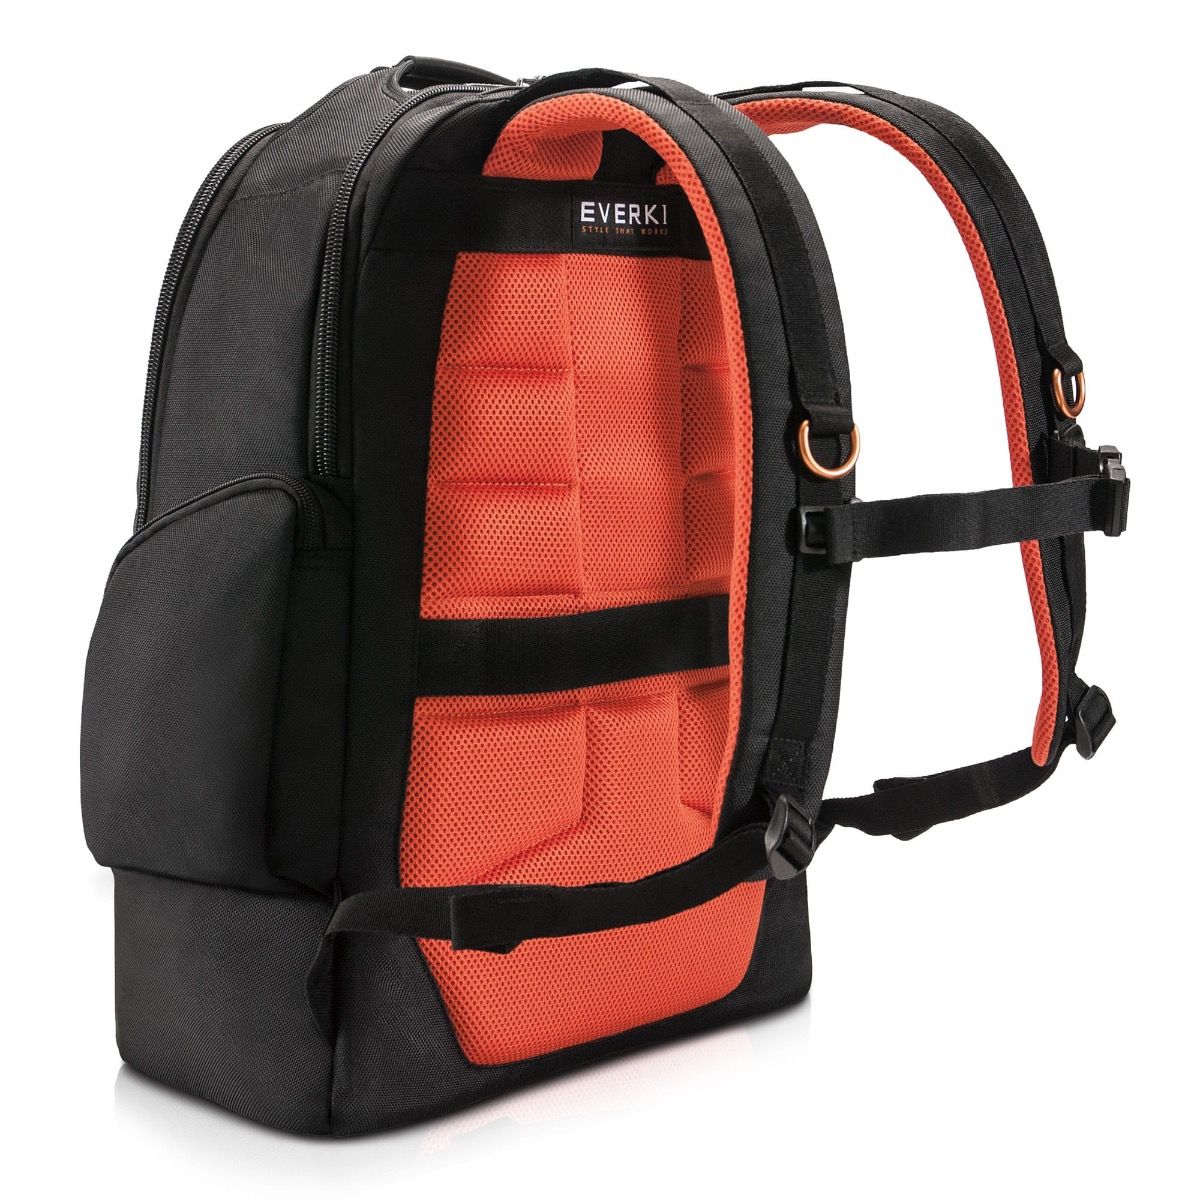 EVERKI ContemPRO 117 Laptop Backpack